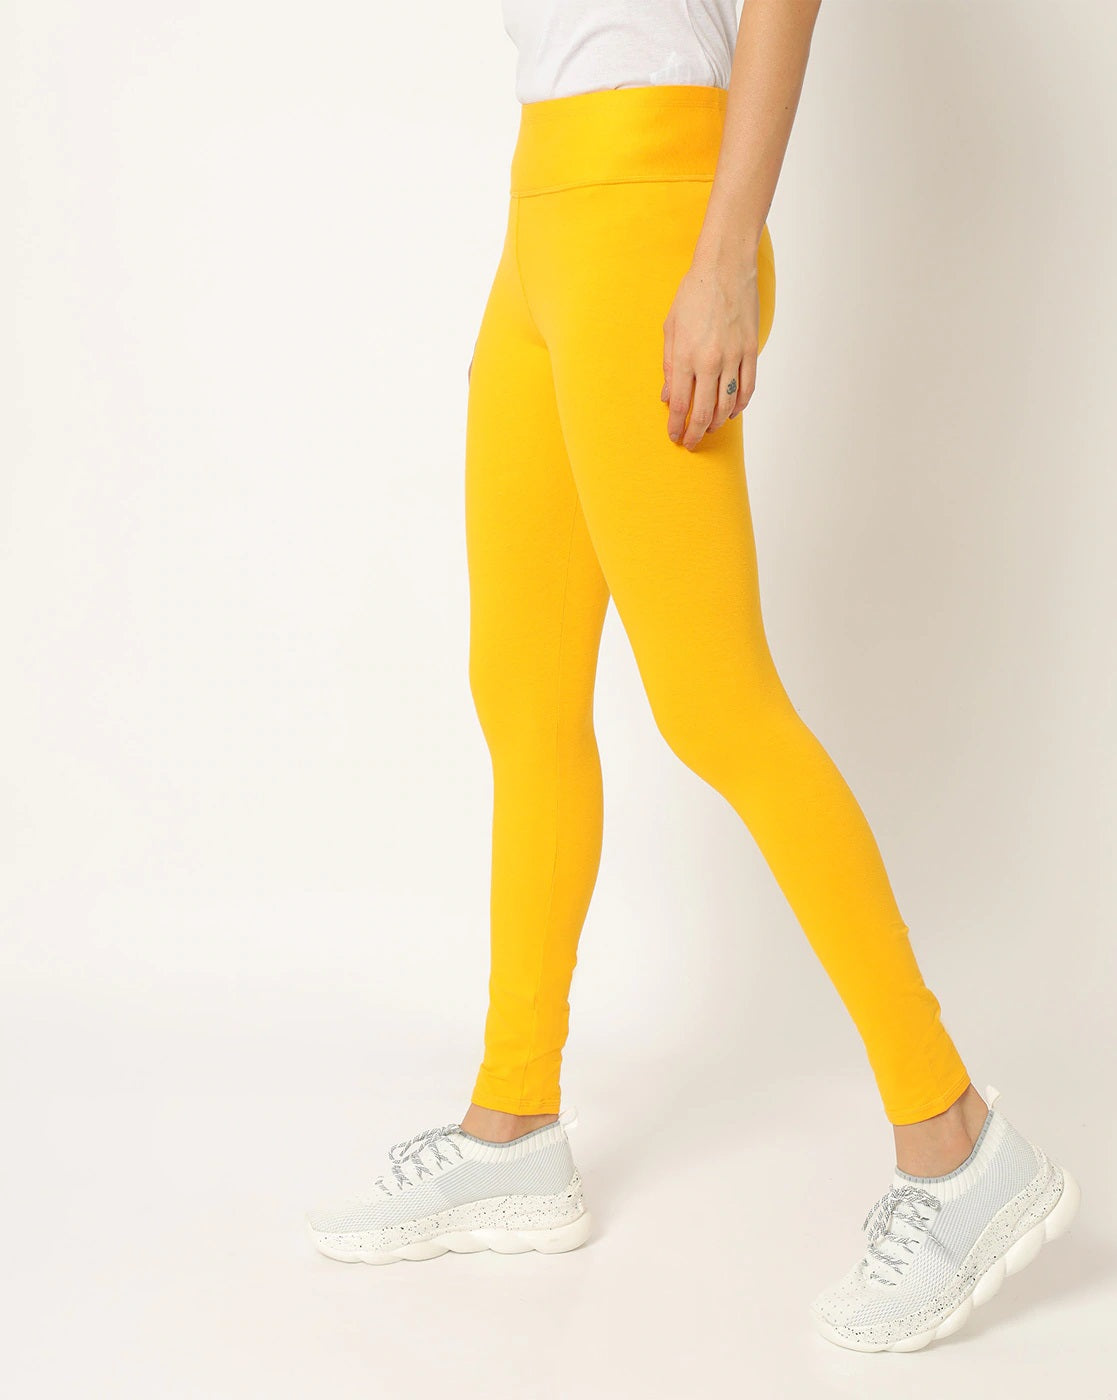 Aloha art yellow leggings : Beautiful #Yoga Pants - #Exercise Leggings and  #Running Tights - Health and Training Insp…